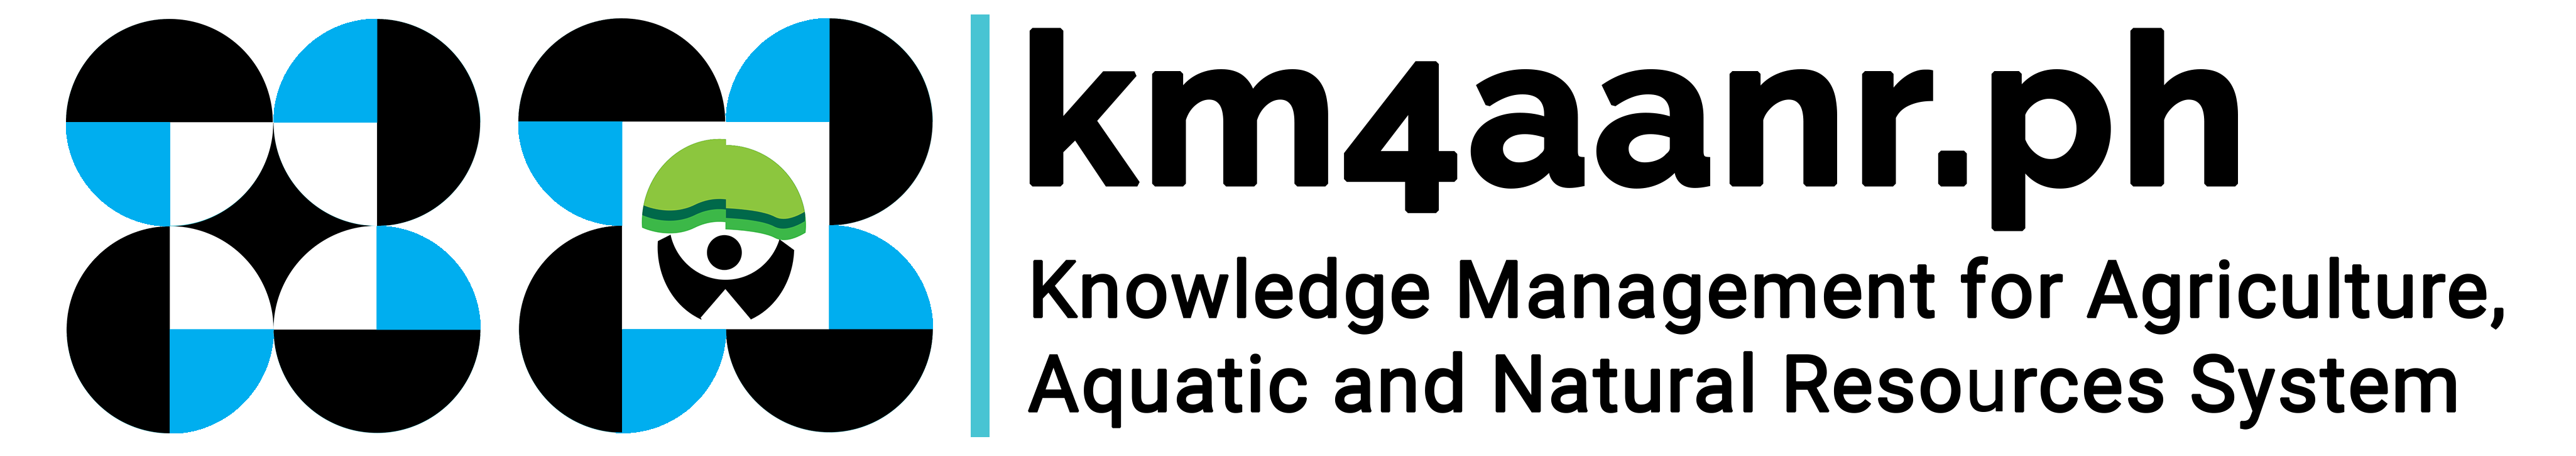 PCAARRD logo